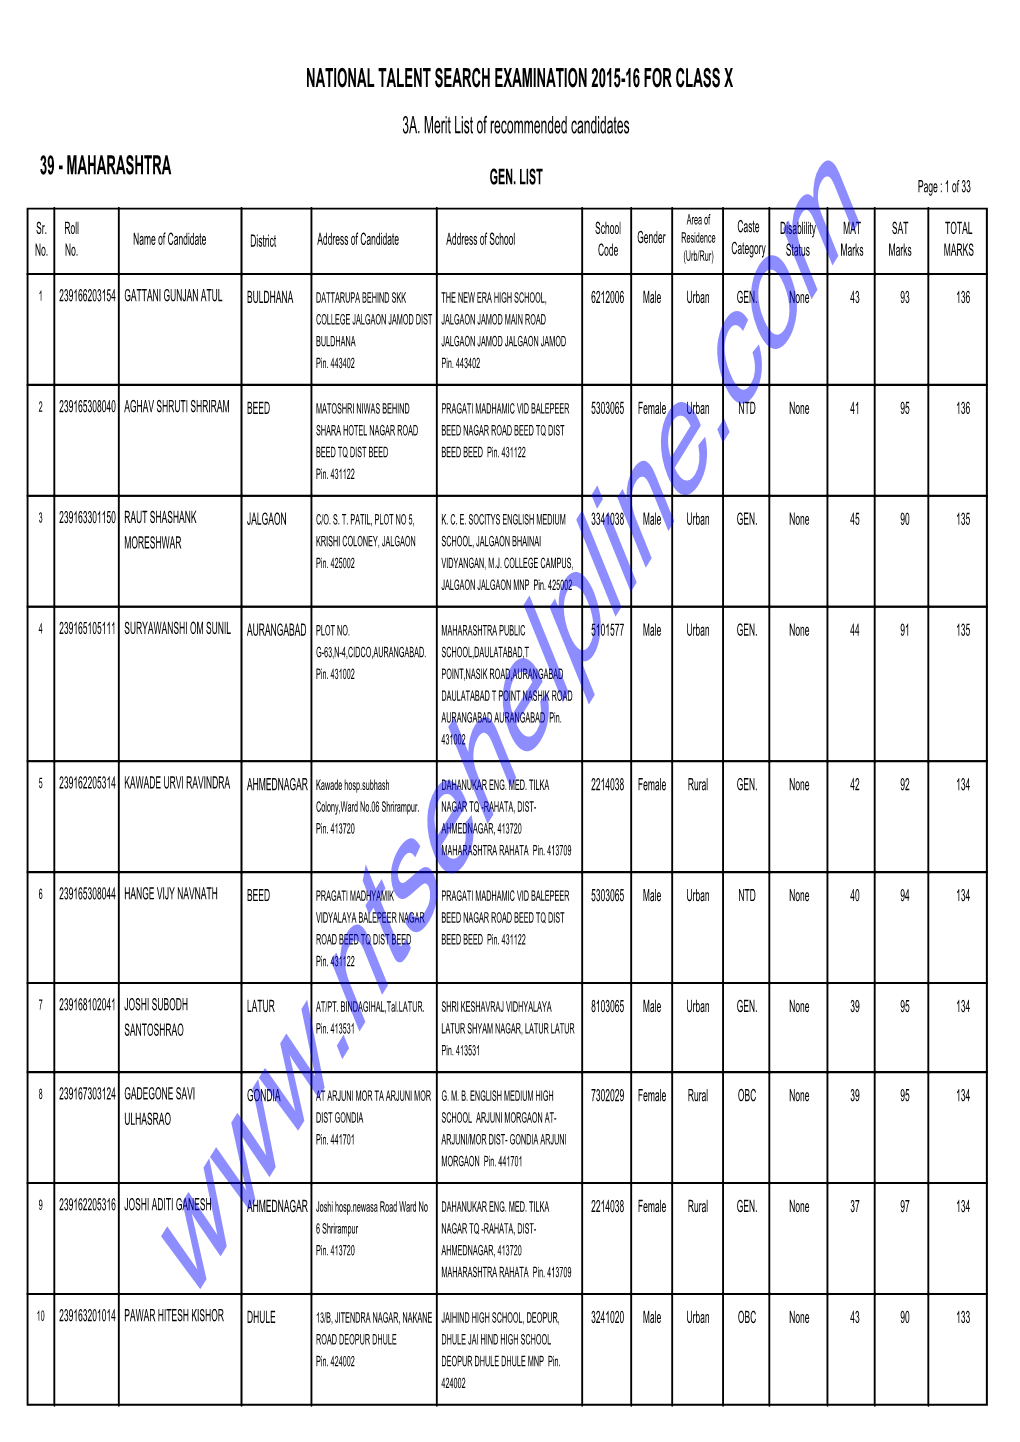 Merit List of Recommended Candidates 39 - MAHARASHTRA GEN